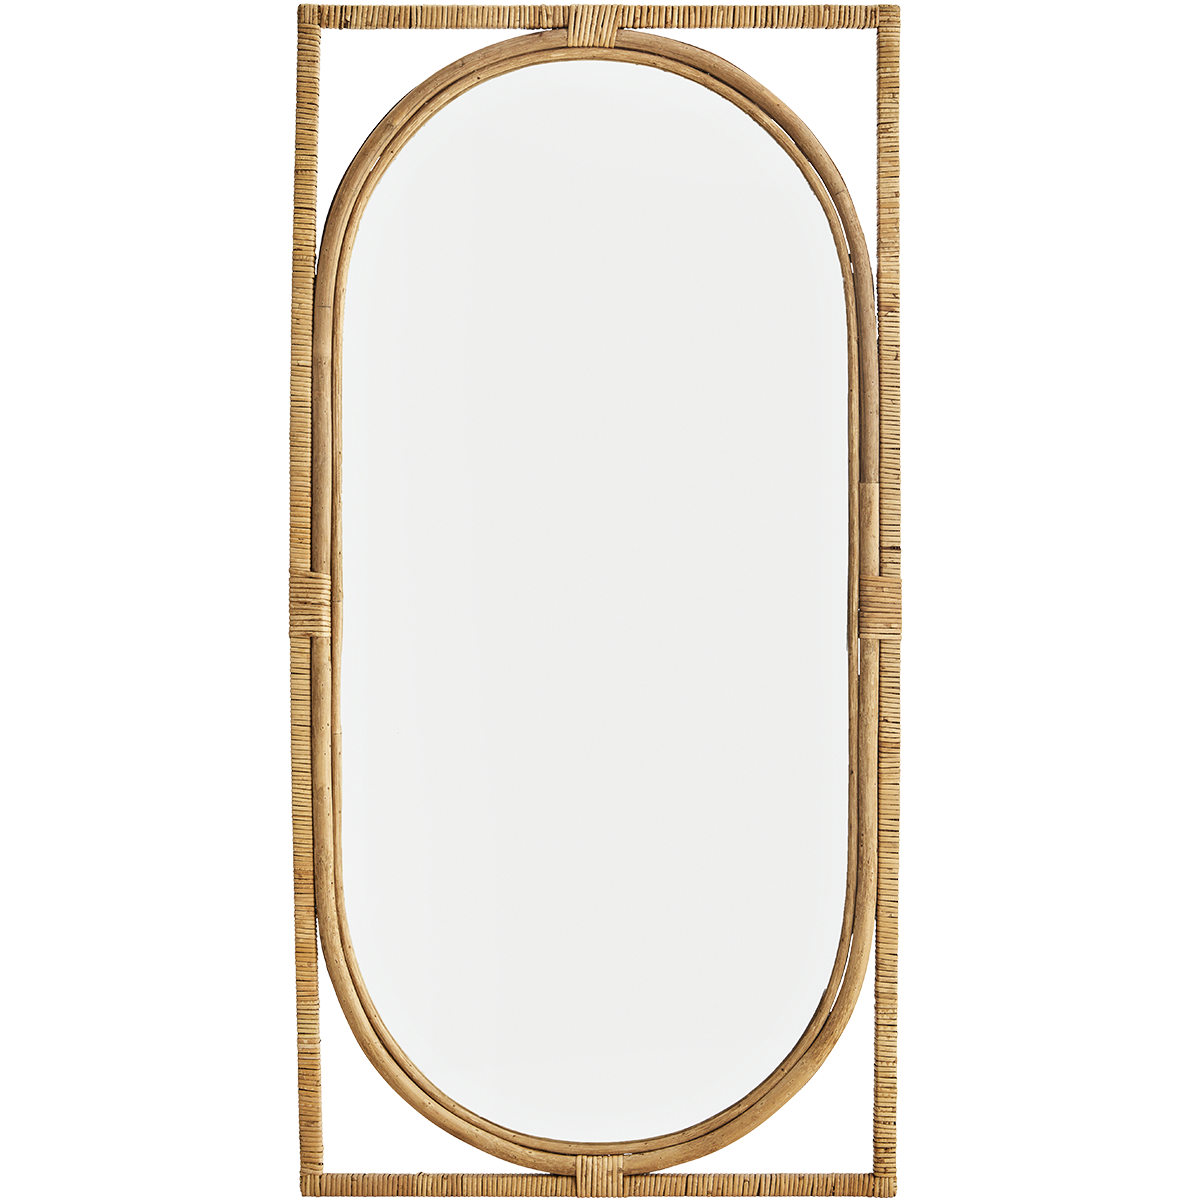 Oval mirror w/ rattan frame